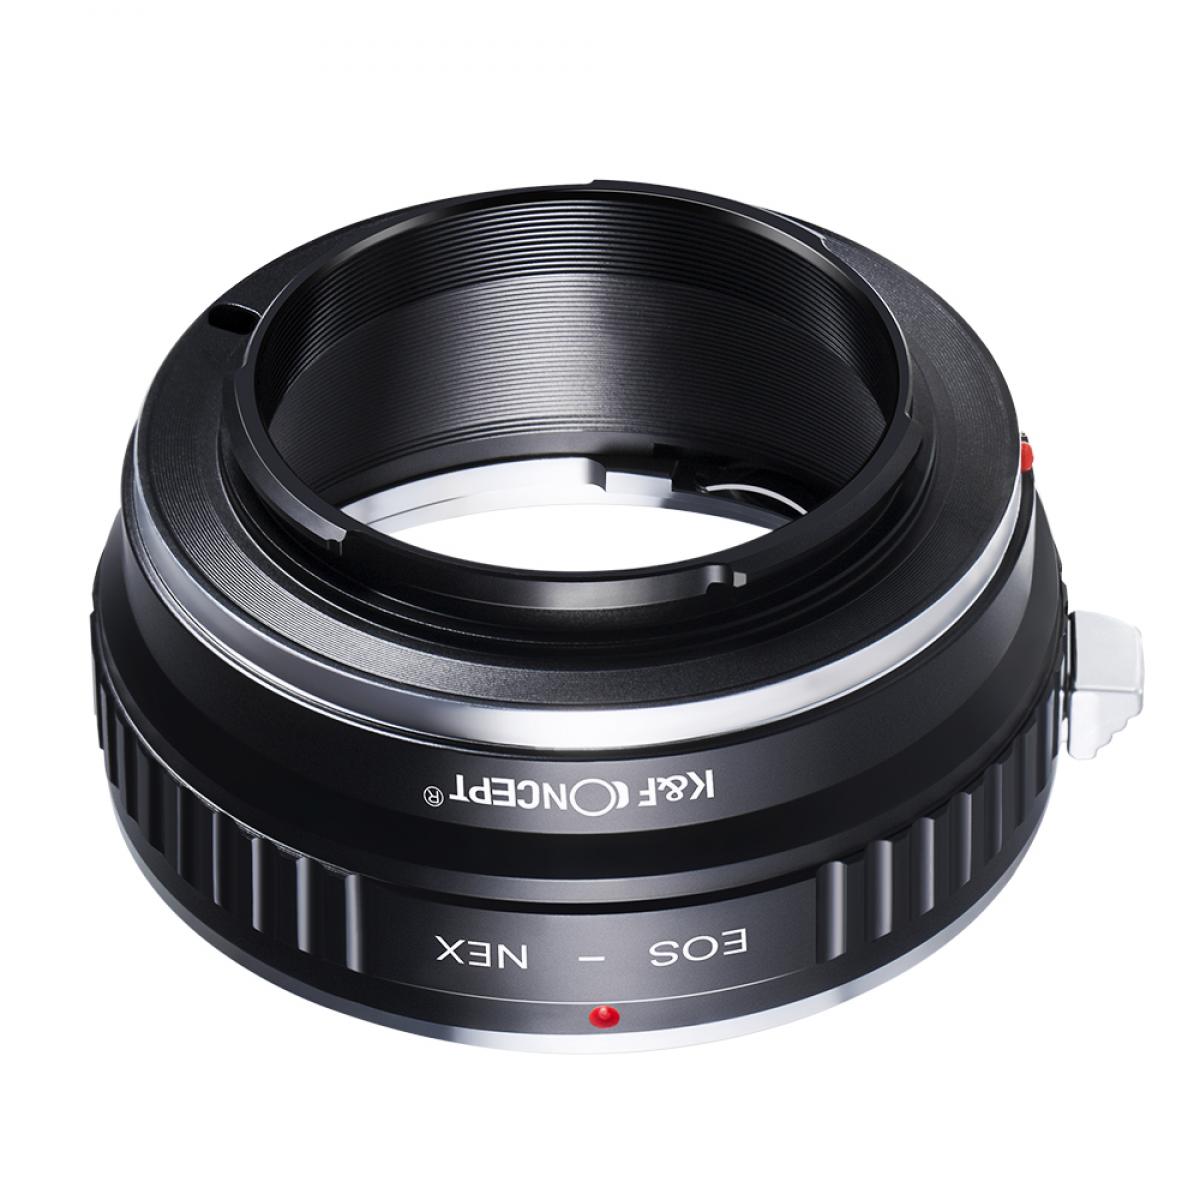 K&F Concept M12101 Bague Adaptation Objectif Canon EF vers Sony E Mount Appareil Photo